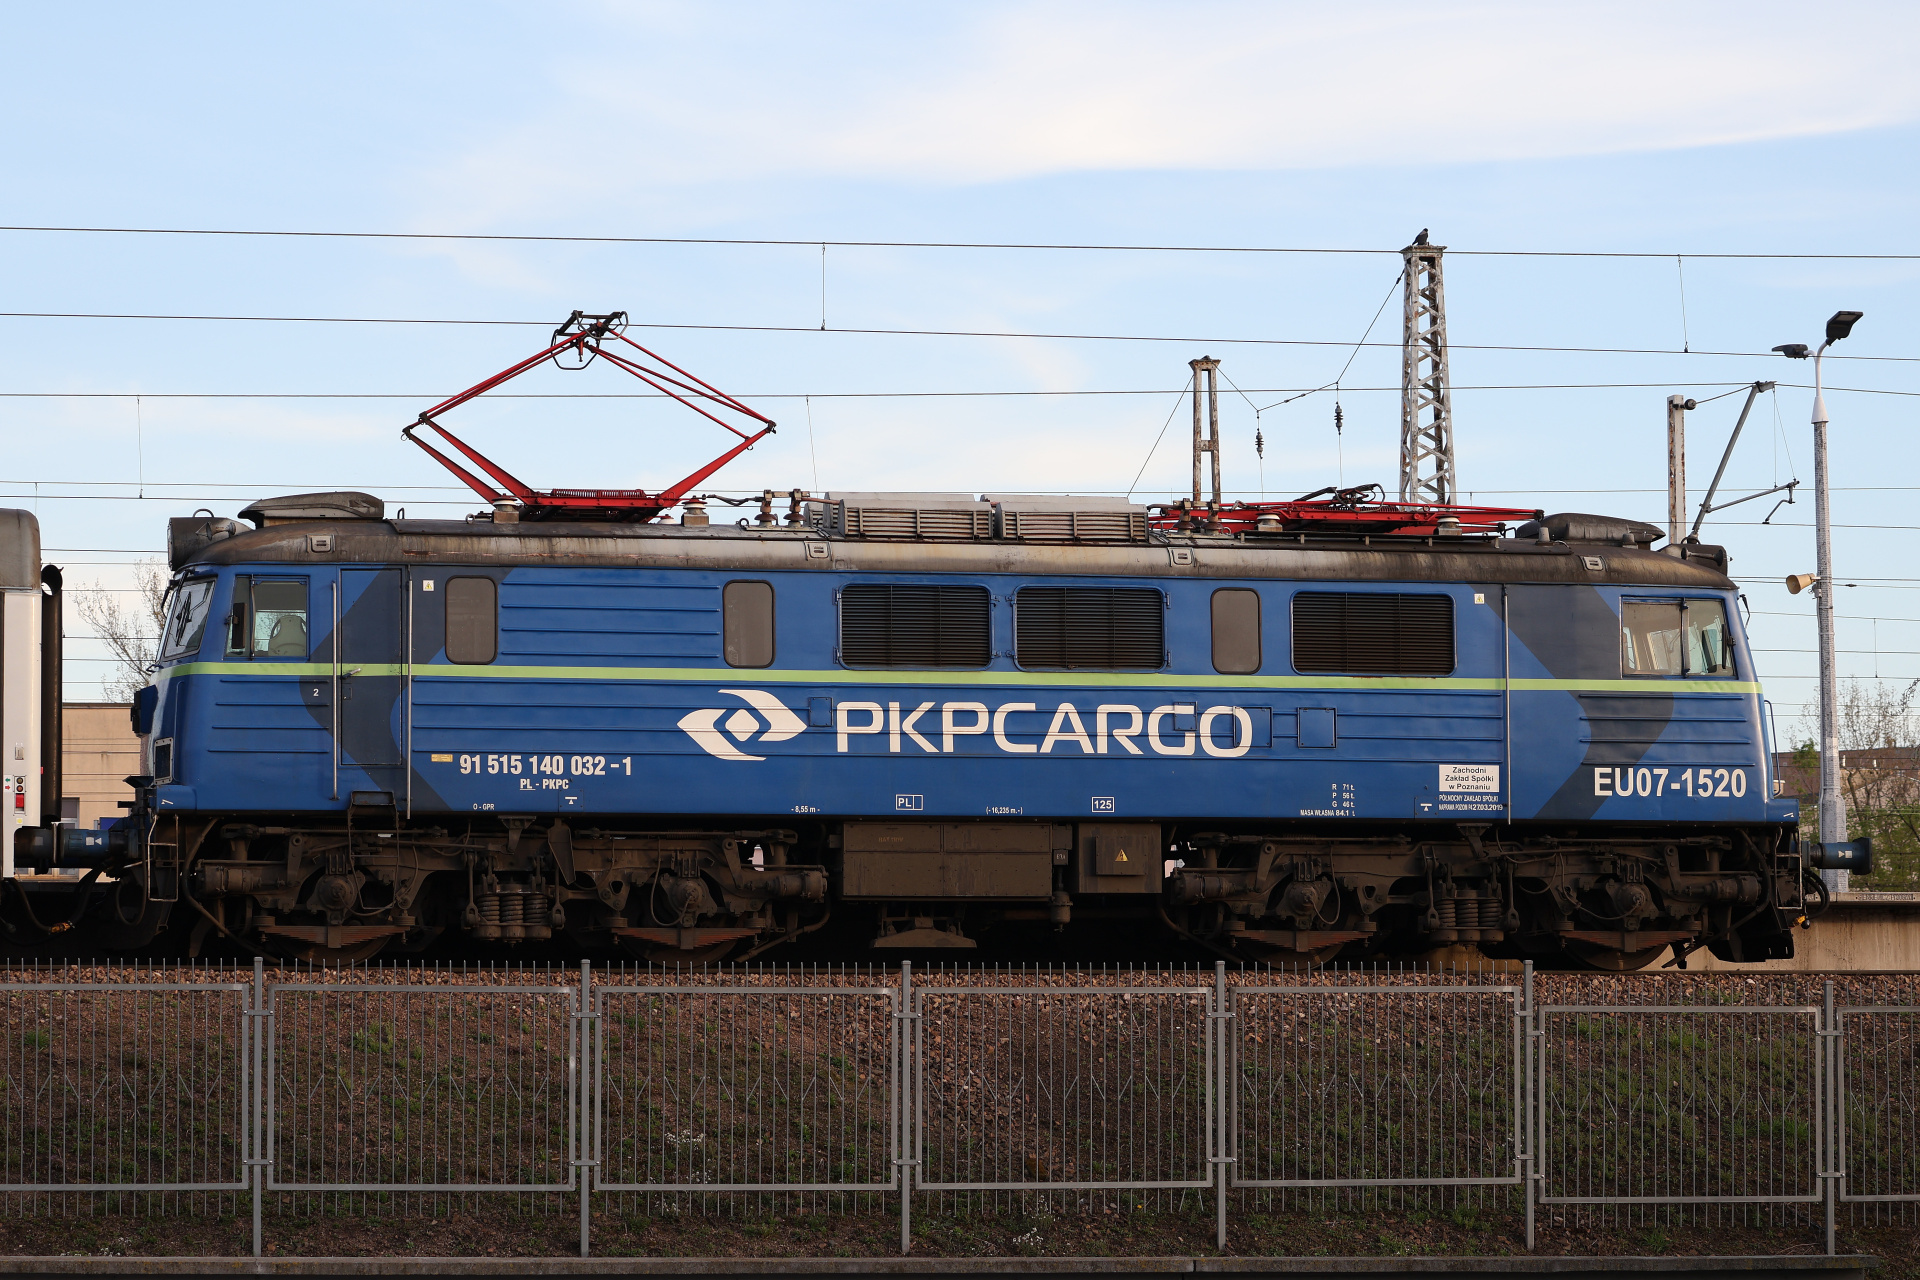 EU07-1520 (Vehicles » Trains and Locomotives » HCP 303E)